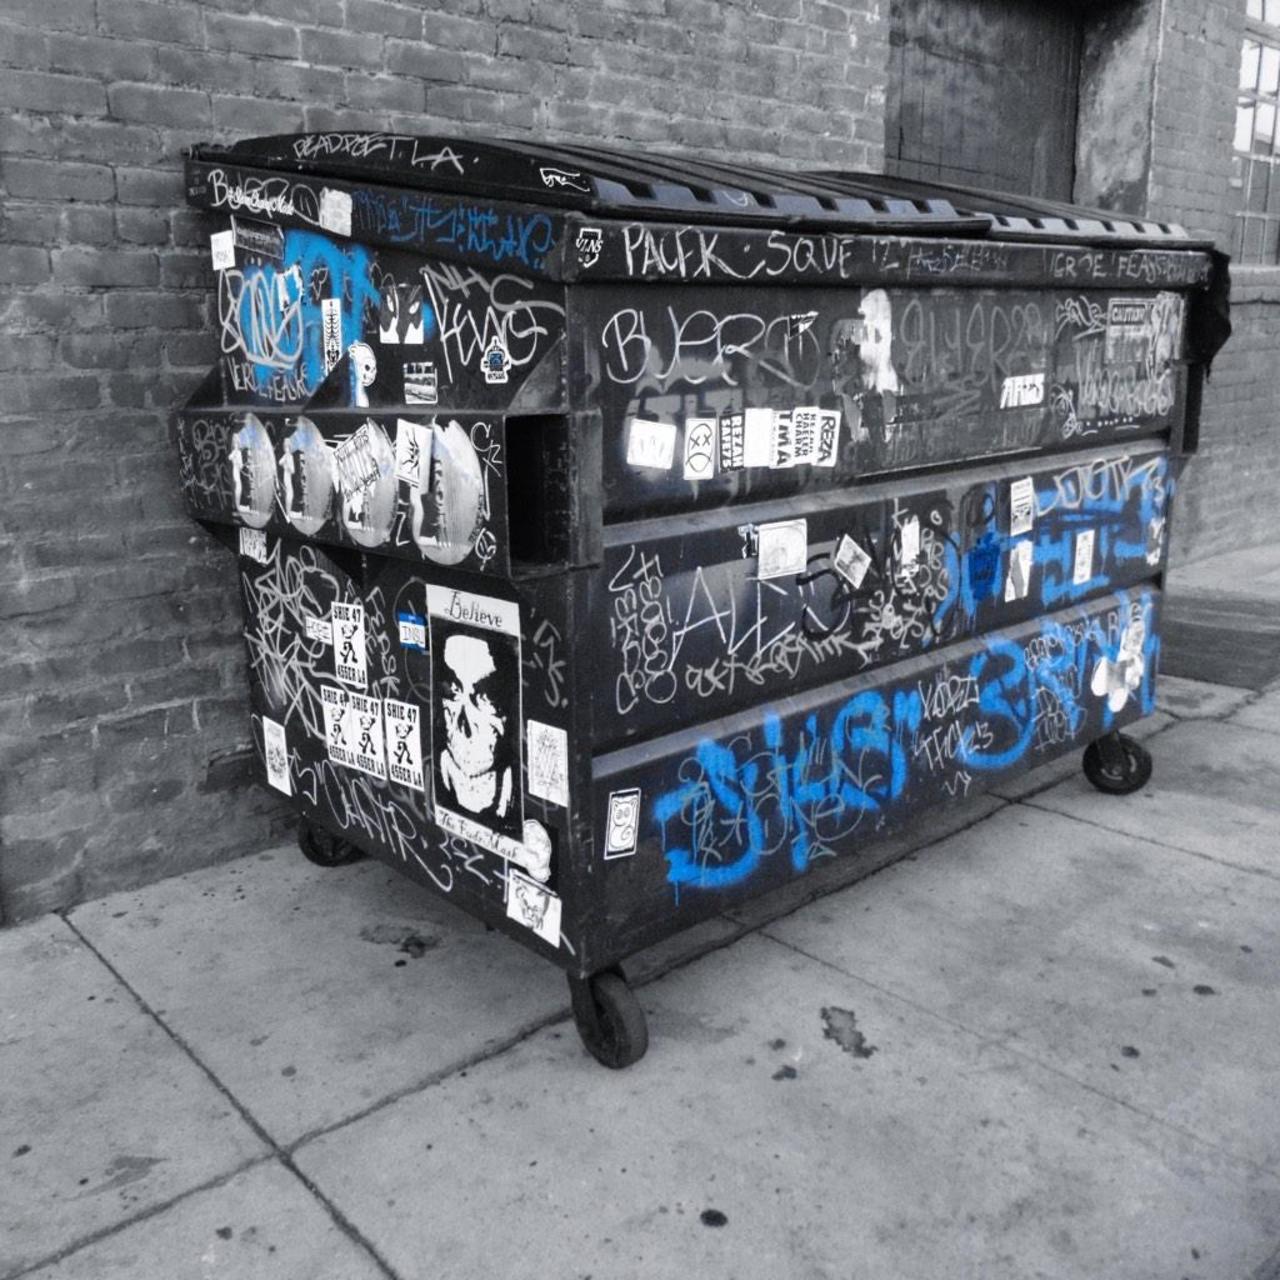 "One man's thrash" #trash #dumpster #garbage #graffiti #tagging #tag #blue #photograpy #art #losangeles #california http://t.co/cmaMftREO1